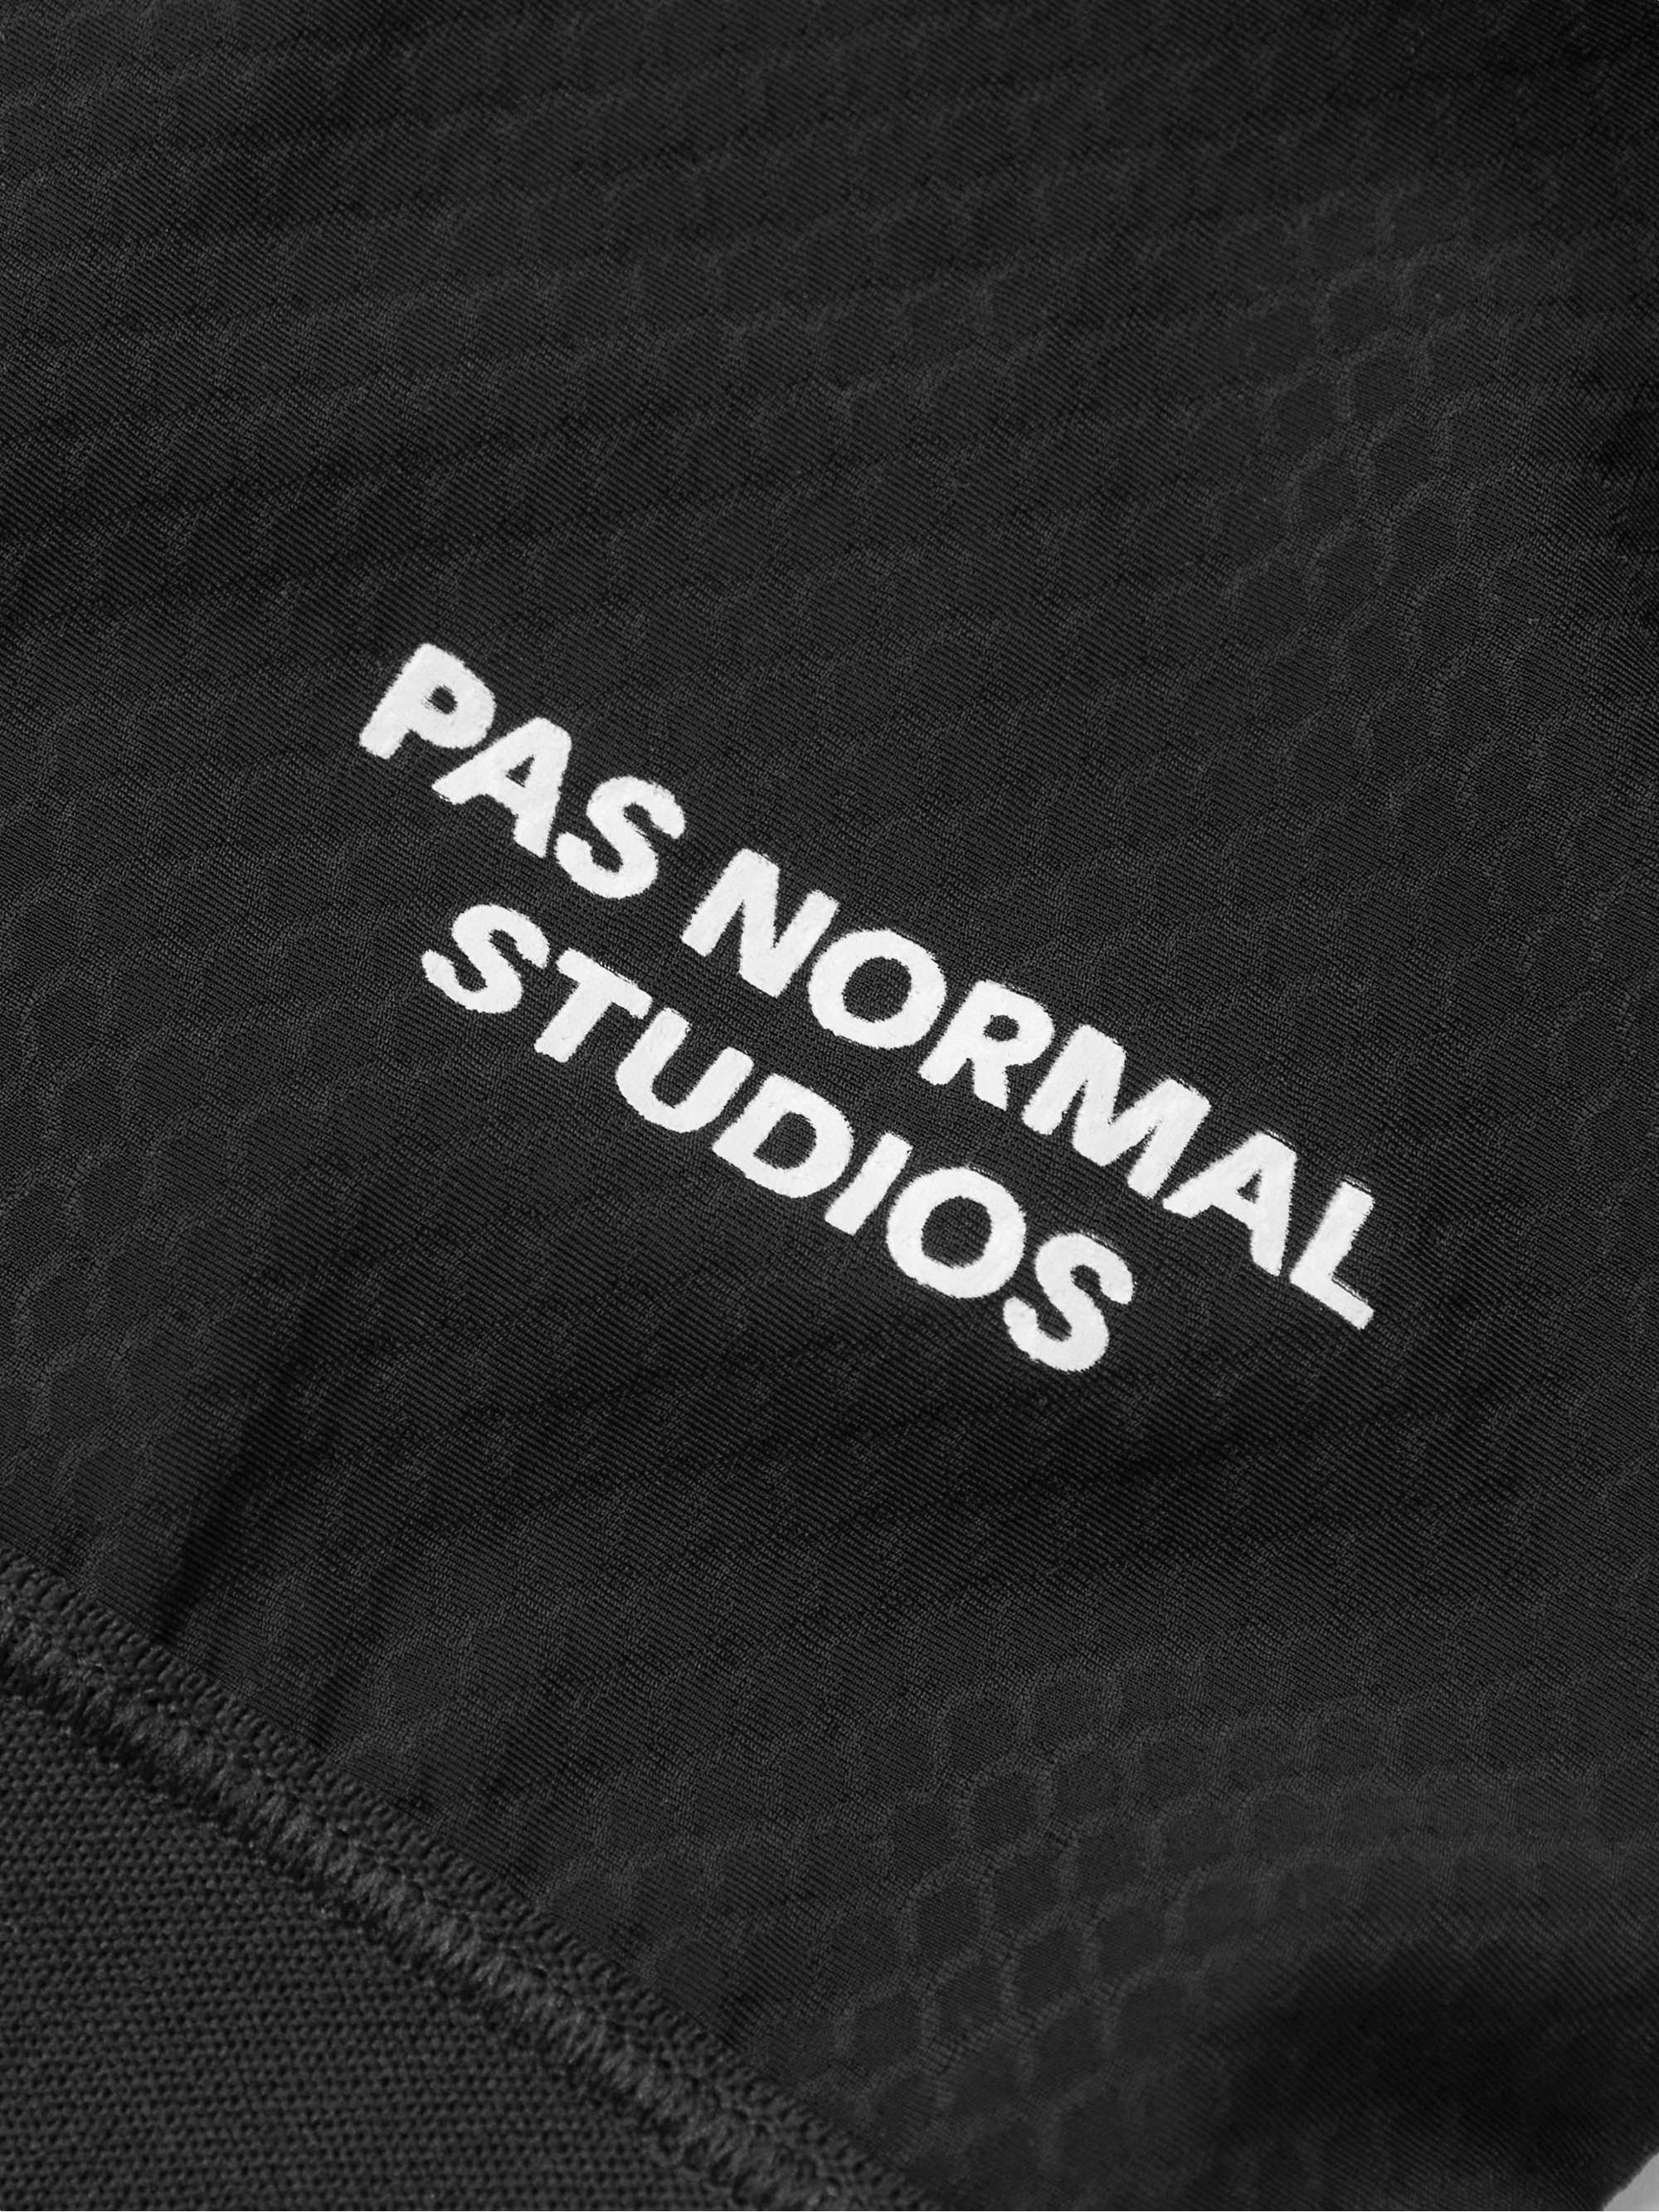 PAS NORMAL STUDIOS Essential Logo-Print Stretch-Jersey and Mesh Cycling Bib Shorts